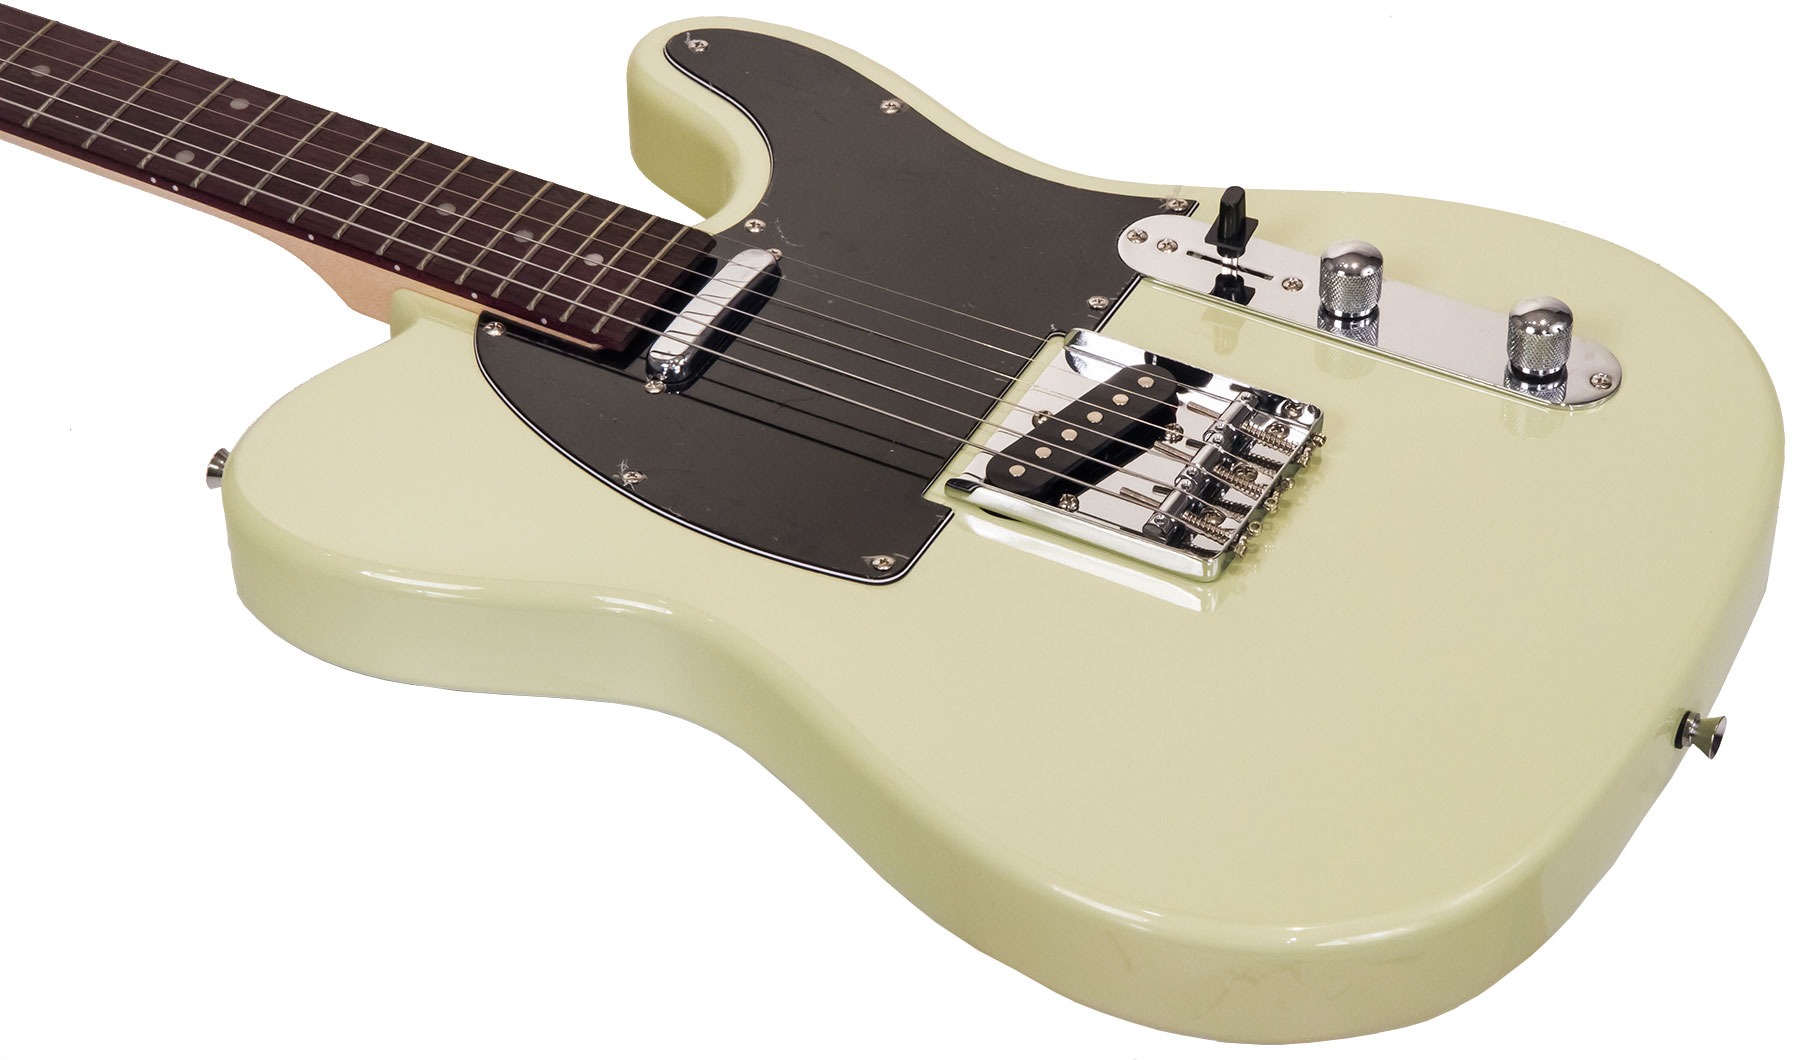 Eastone Tl70 Ss Ht Rw - Ivory - Televorm elektrische gitaar - Variation 2